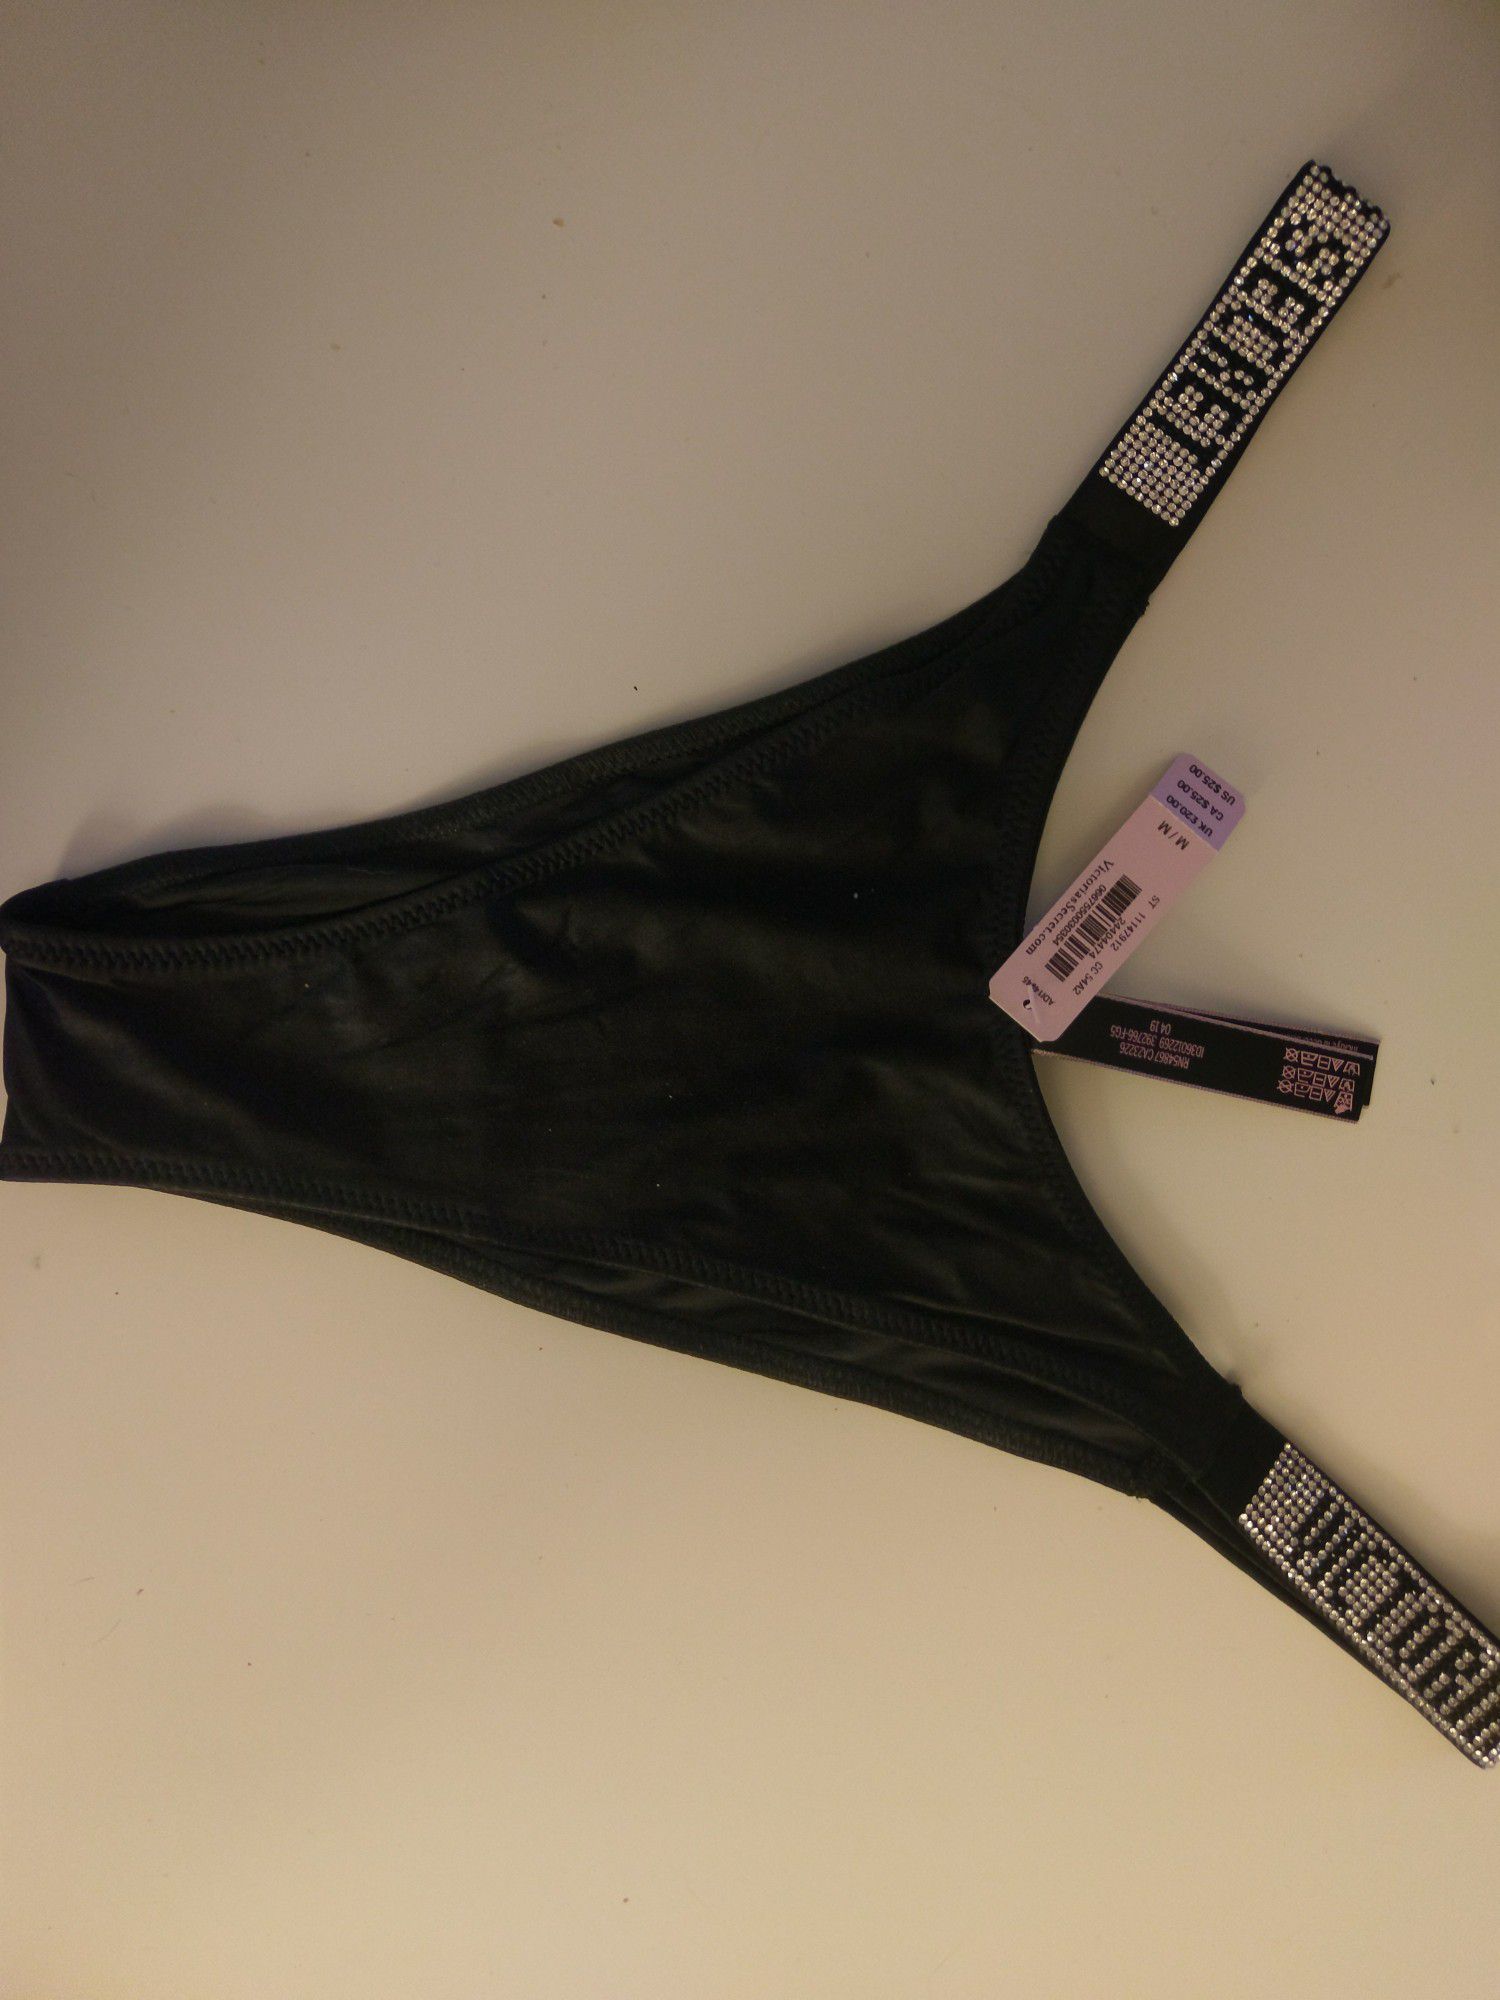 victoria's secret pink - lot of 6 mix underwear panties (bikini, cheeksters..)  for Sale in San Francisco, CA - OfferUp